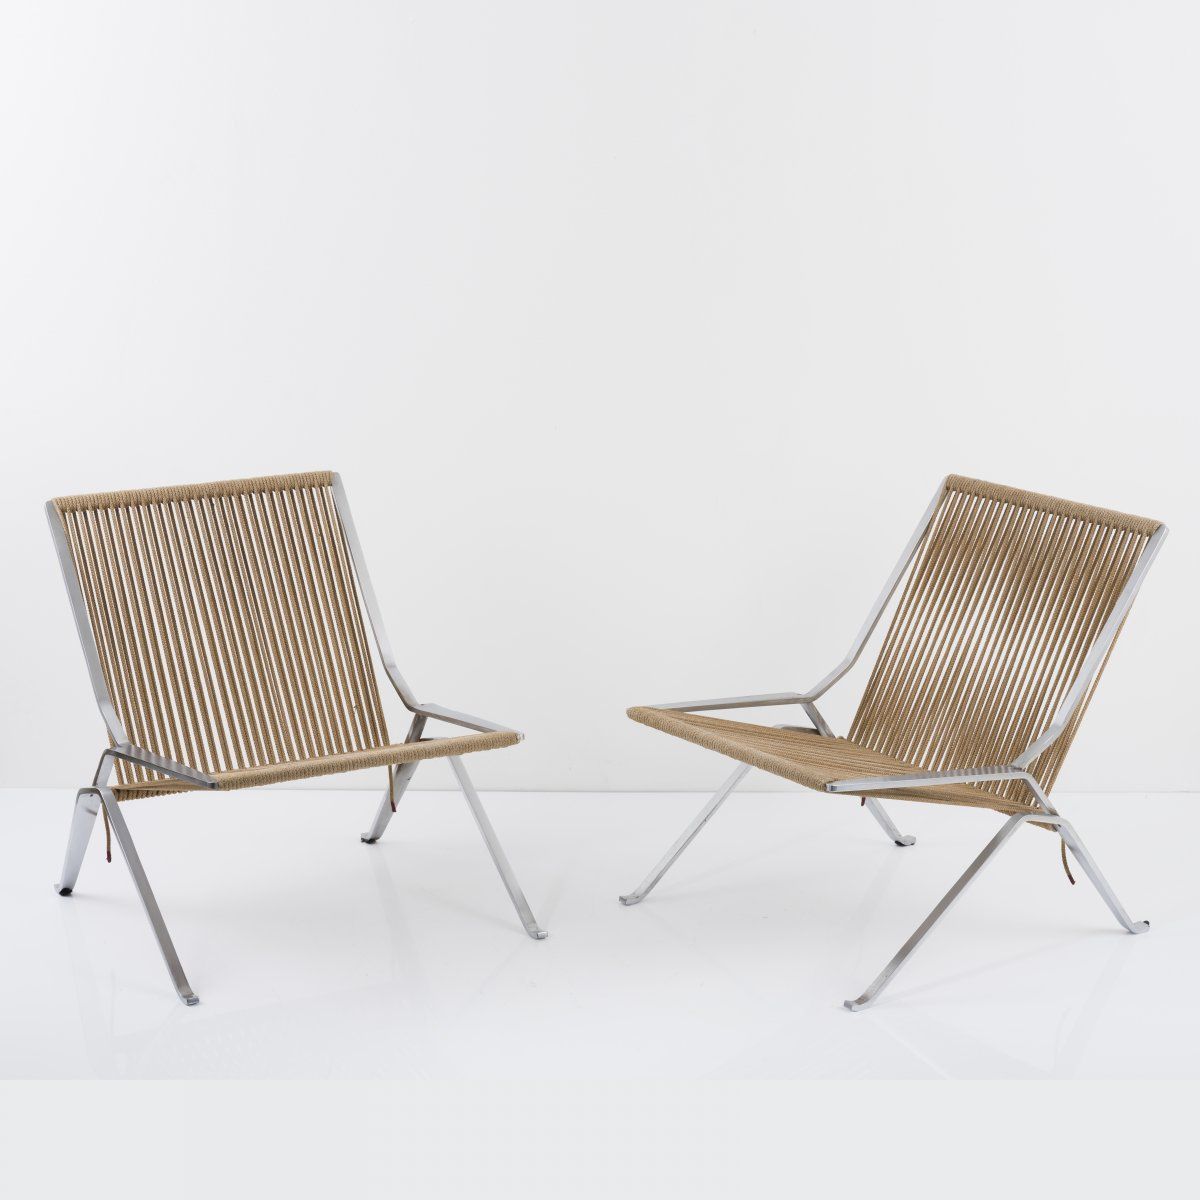 Null Poul Kjaerholm, 2 'PK 25' - 'Element chairs', 1952, H. 73 x 68,5 x 75 cm. F&hellip;